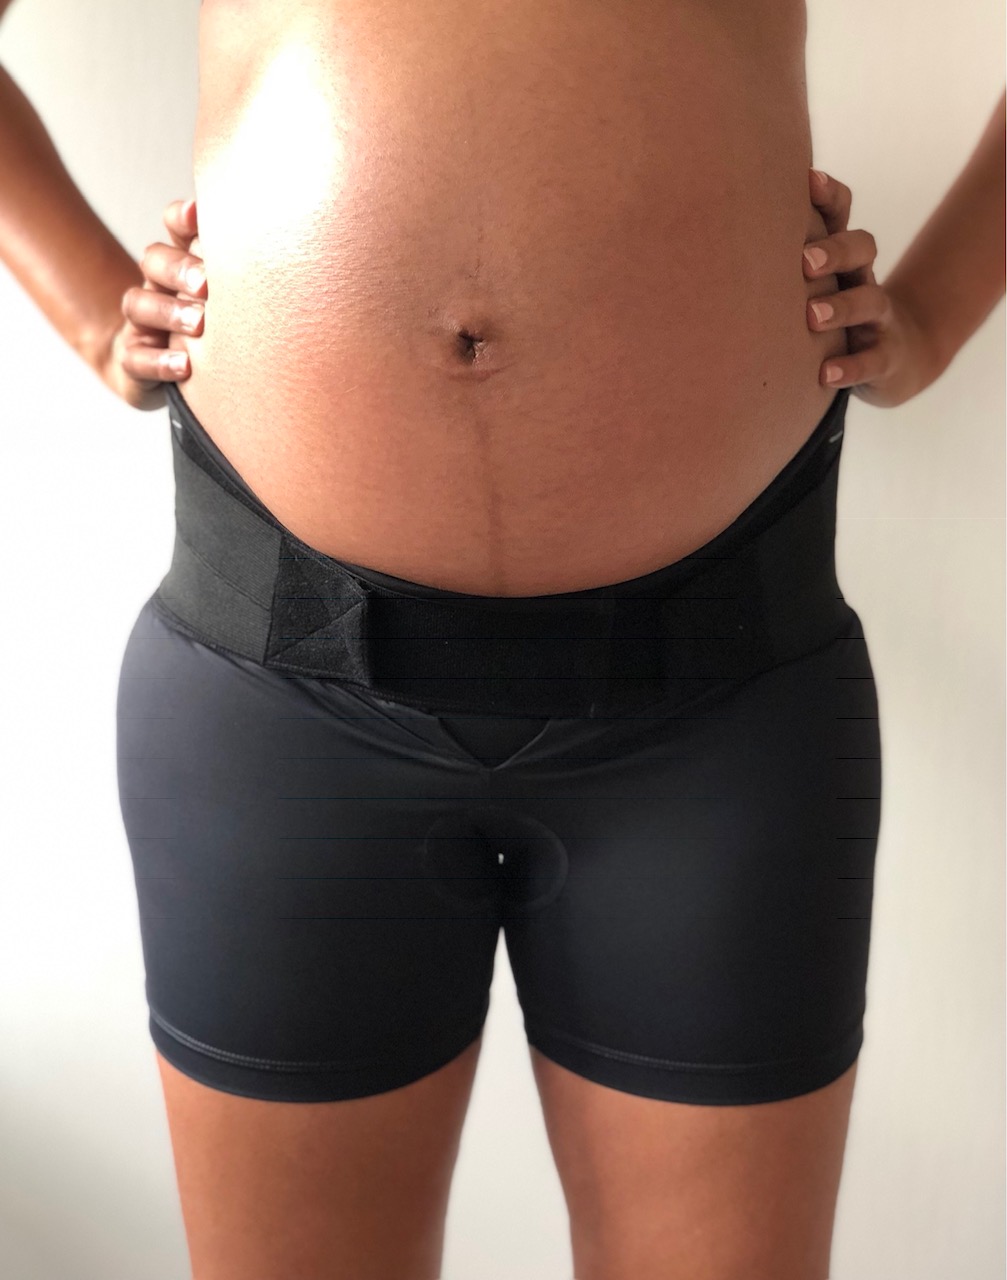 Wisremt Pregnancy Support Corset Prenatal Care Maternity Postpartum Belt  Bandage Slim Corset Women Waist Trainer Body Shaper